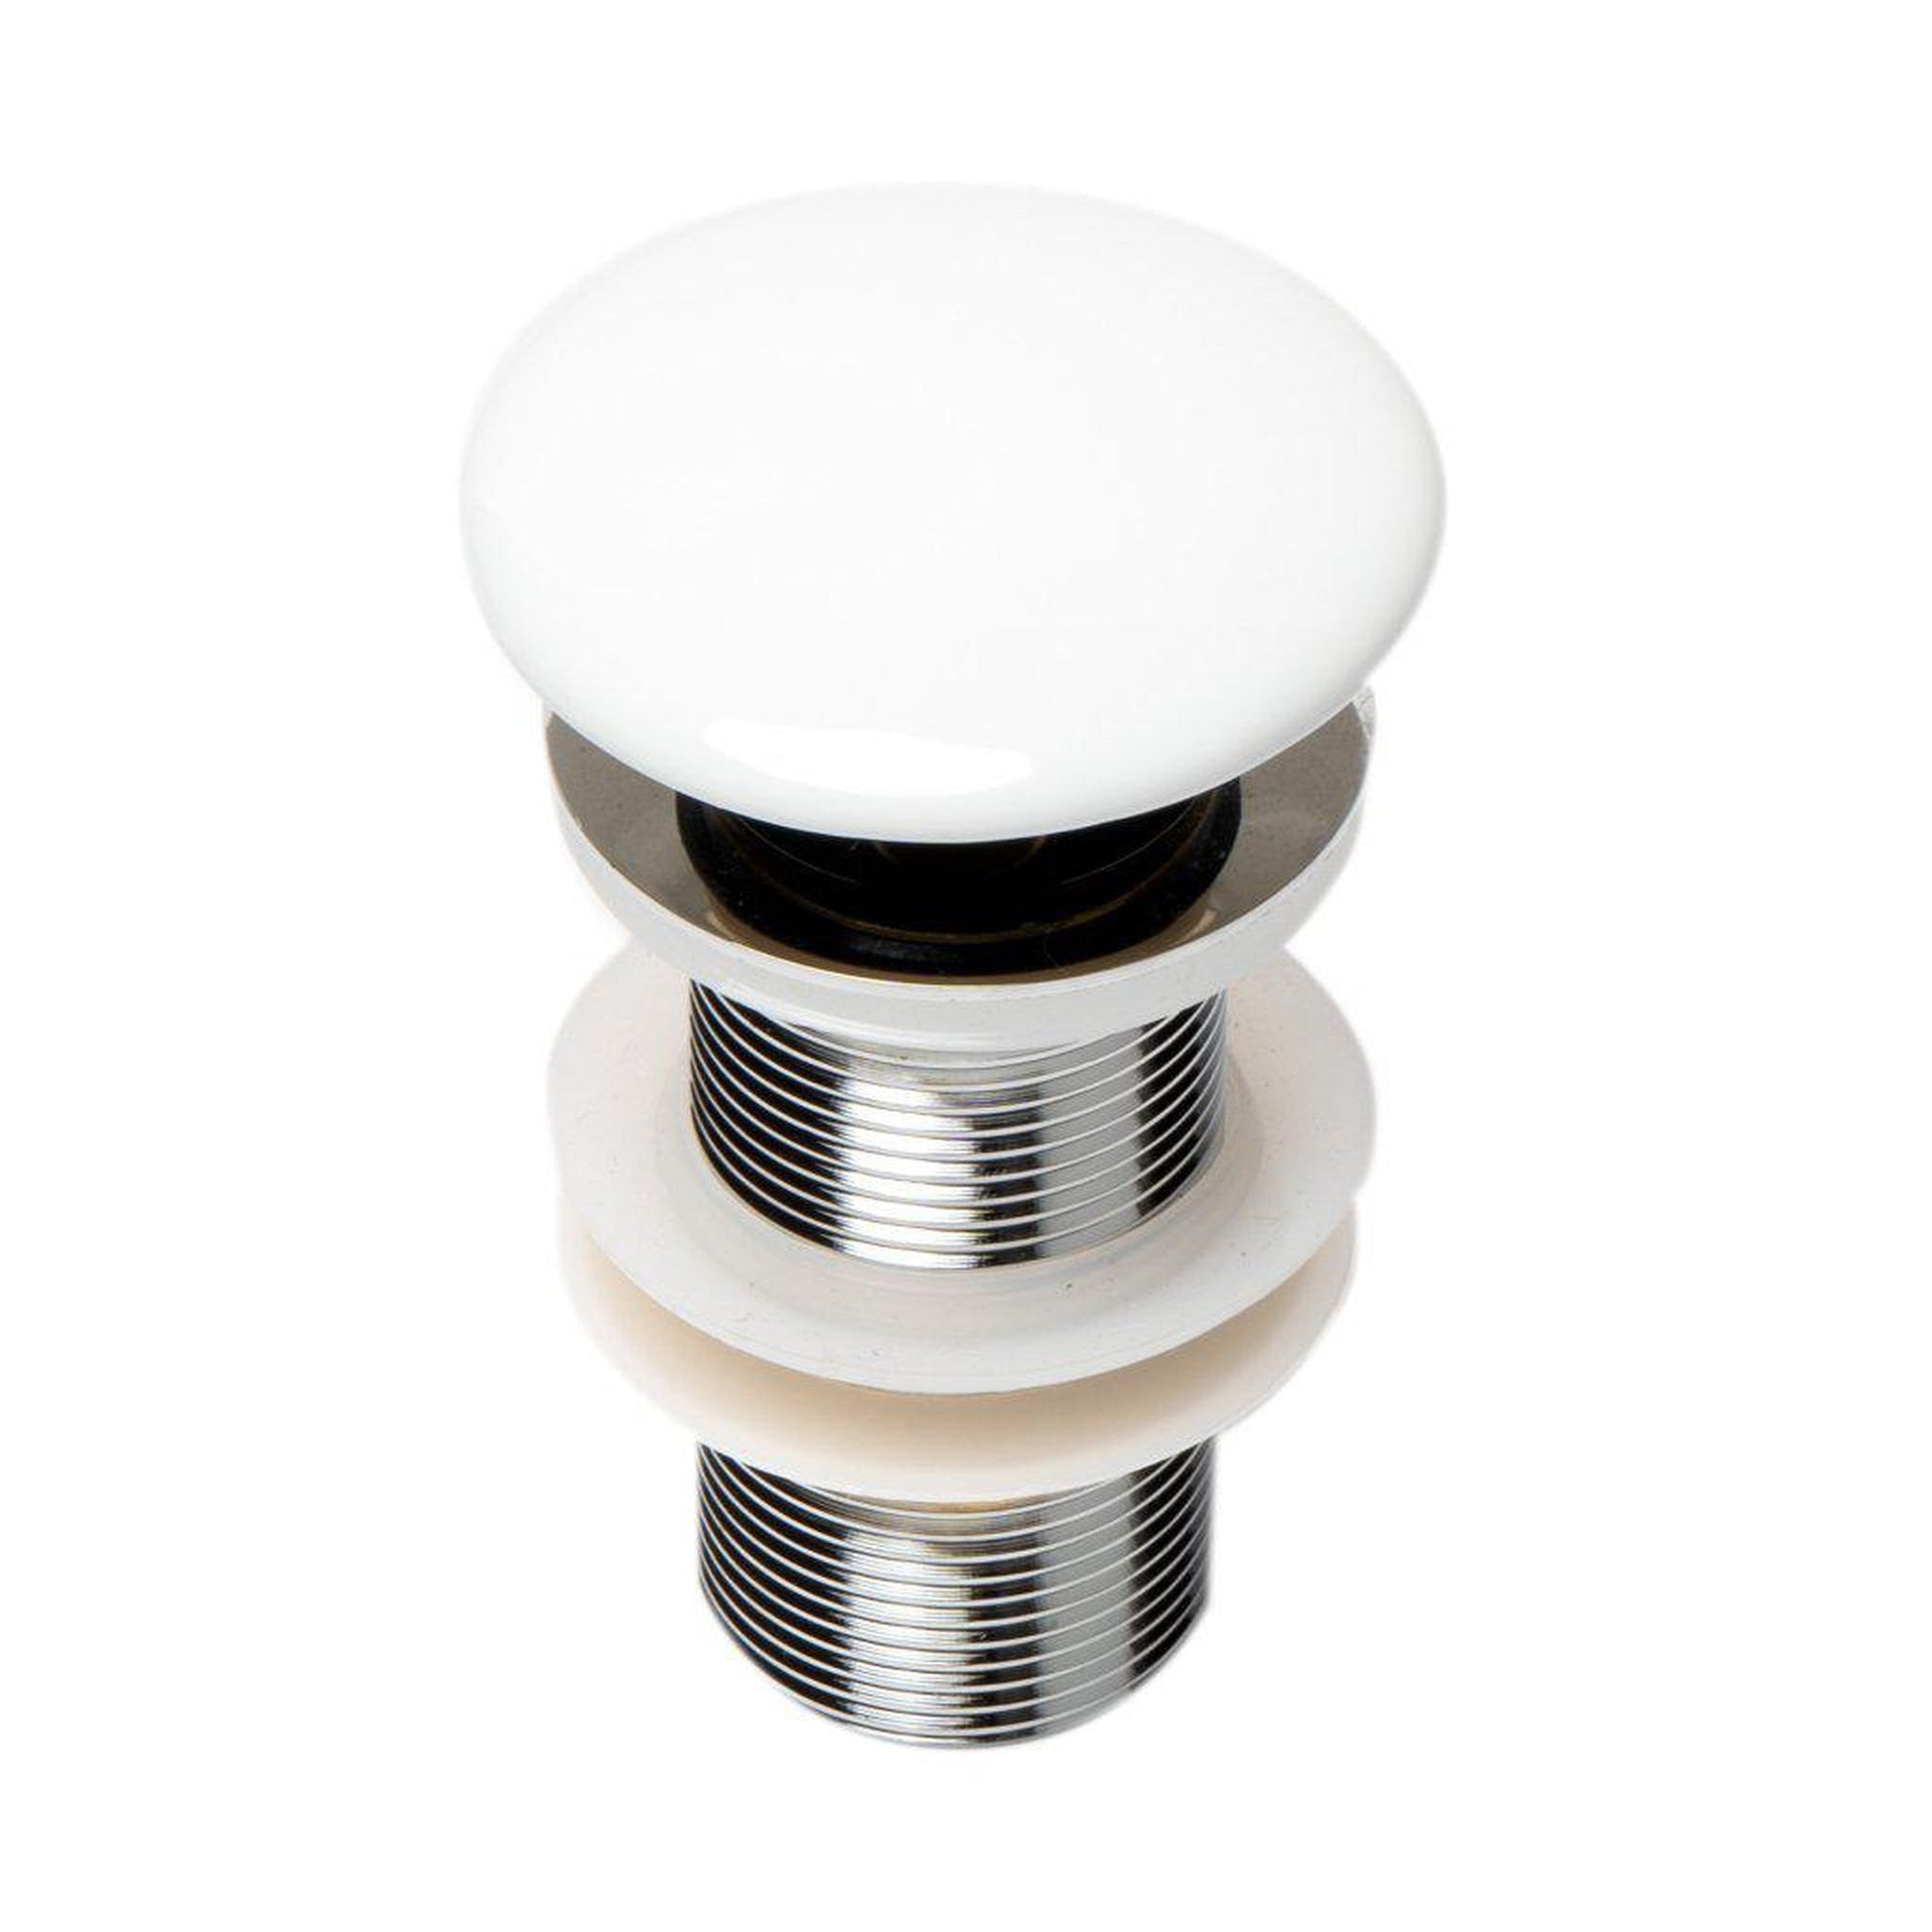 ALFI Brand AB8055-W White Ceramic Mushroom Top Pop Up Bathroom Sink Drain Without Overflow